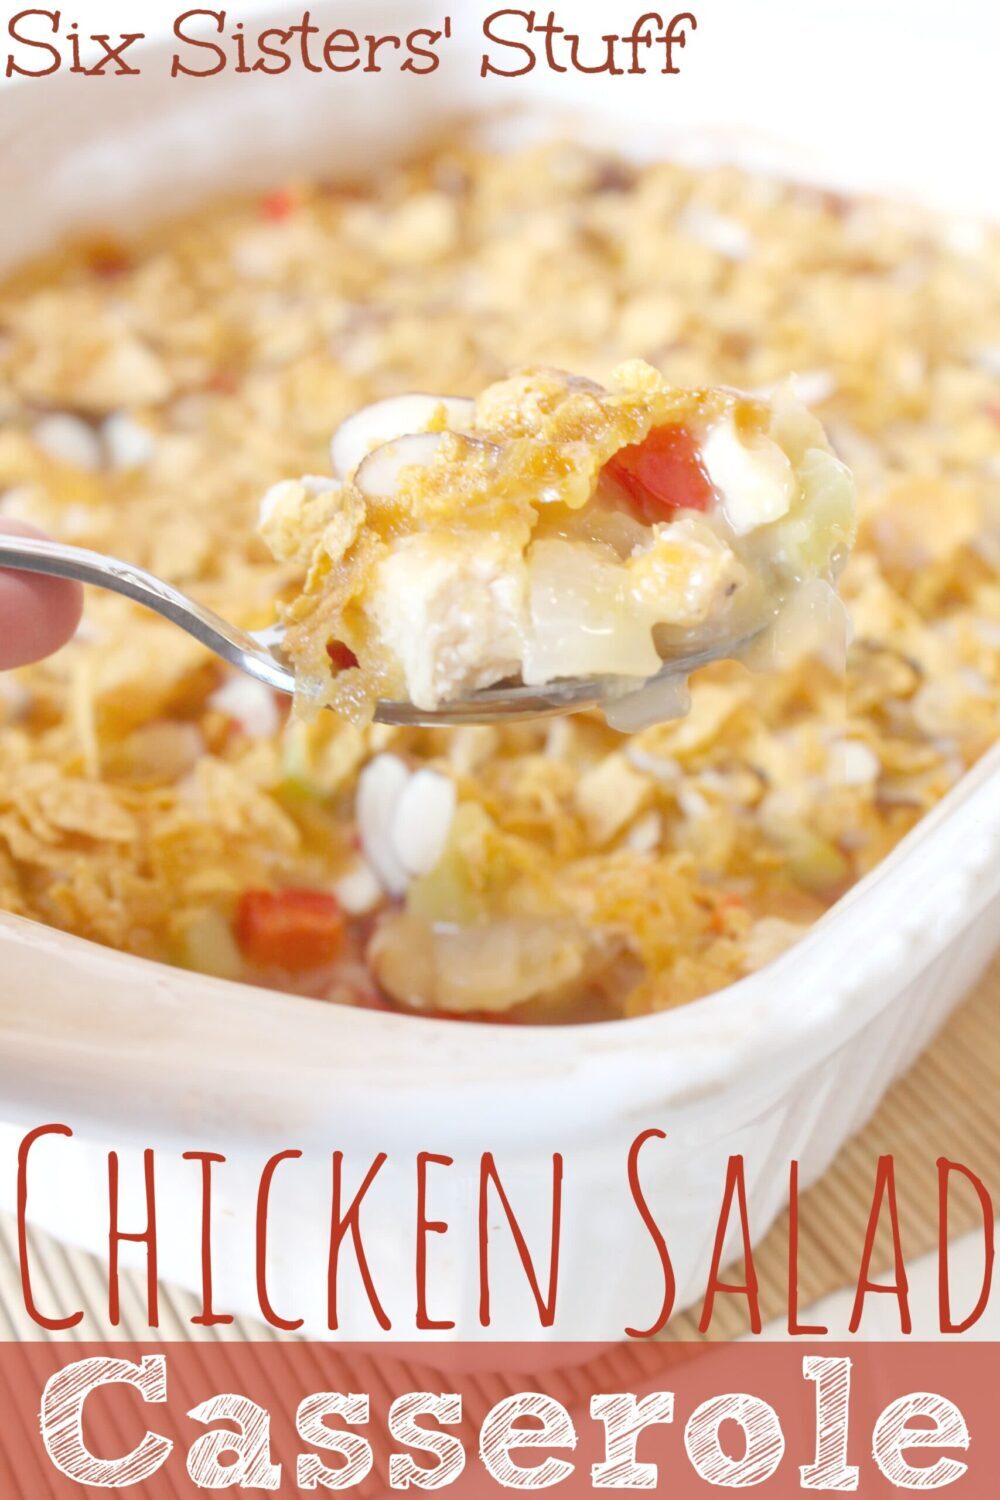 Hot Chicken Salad Casserole Recipe